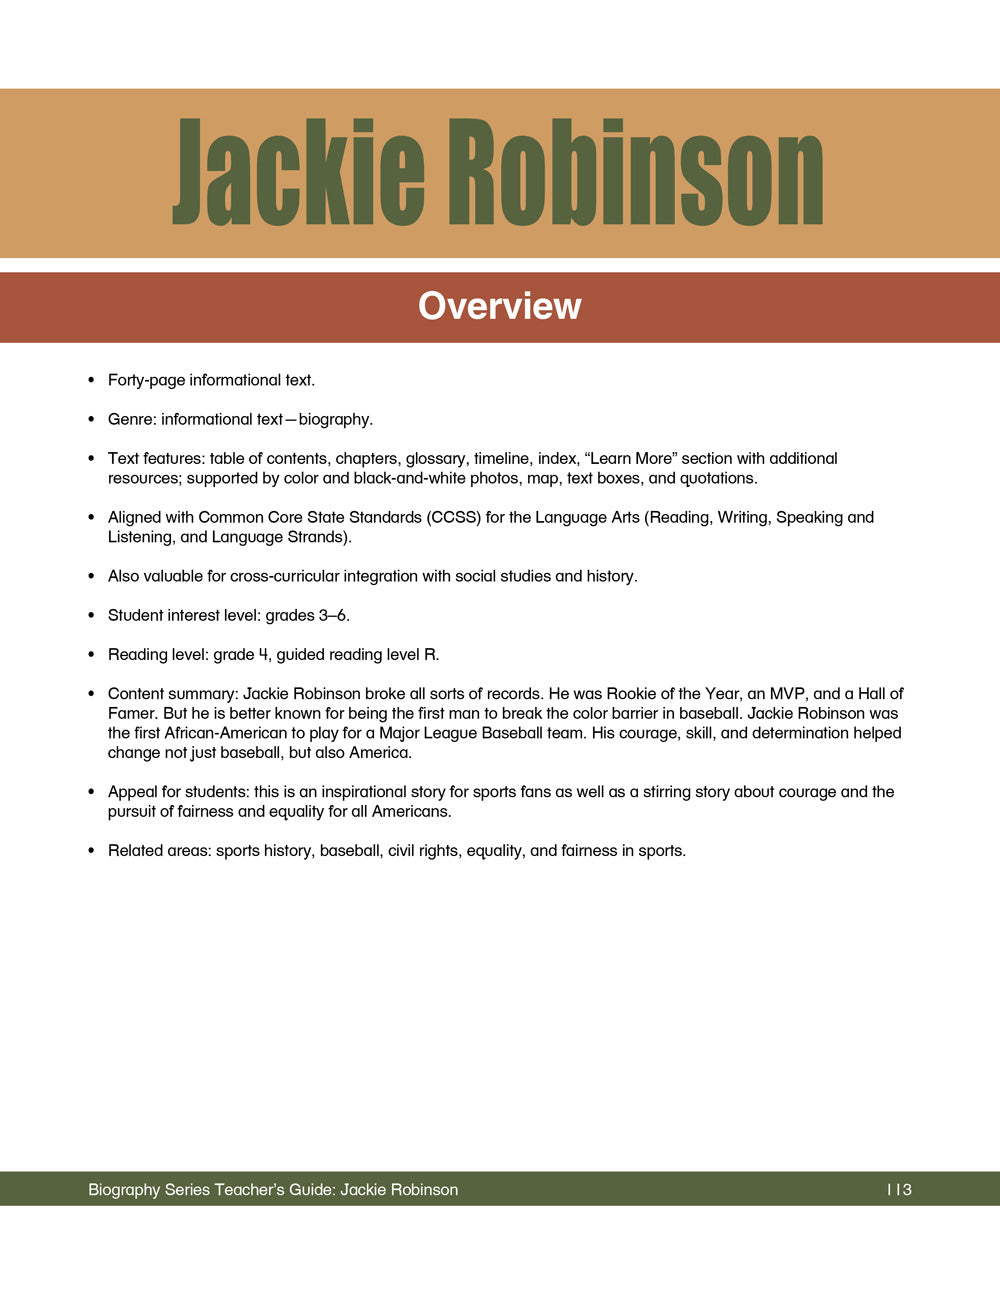 Jackie Robinson Teacher's Guide